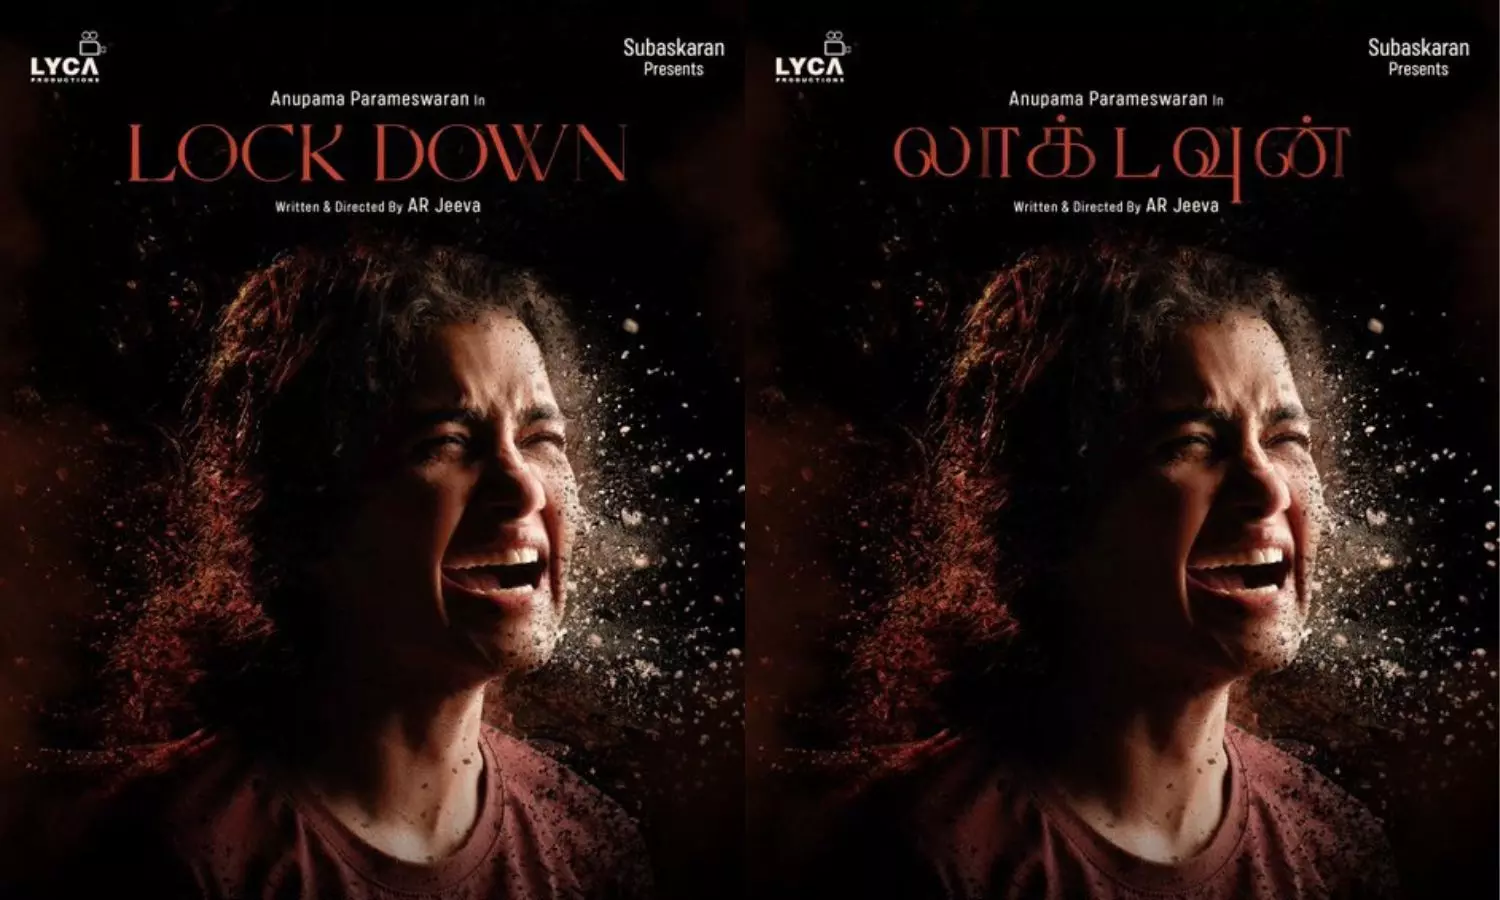 Lock Down: Anupama Parameswarans Cryptic First Look Poster Hints at a Powerful Story